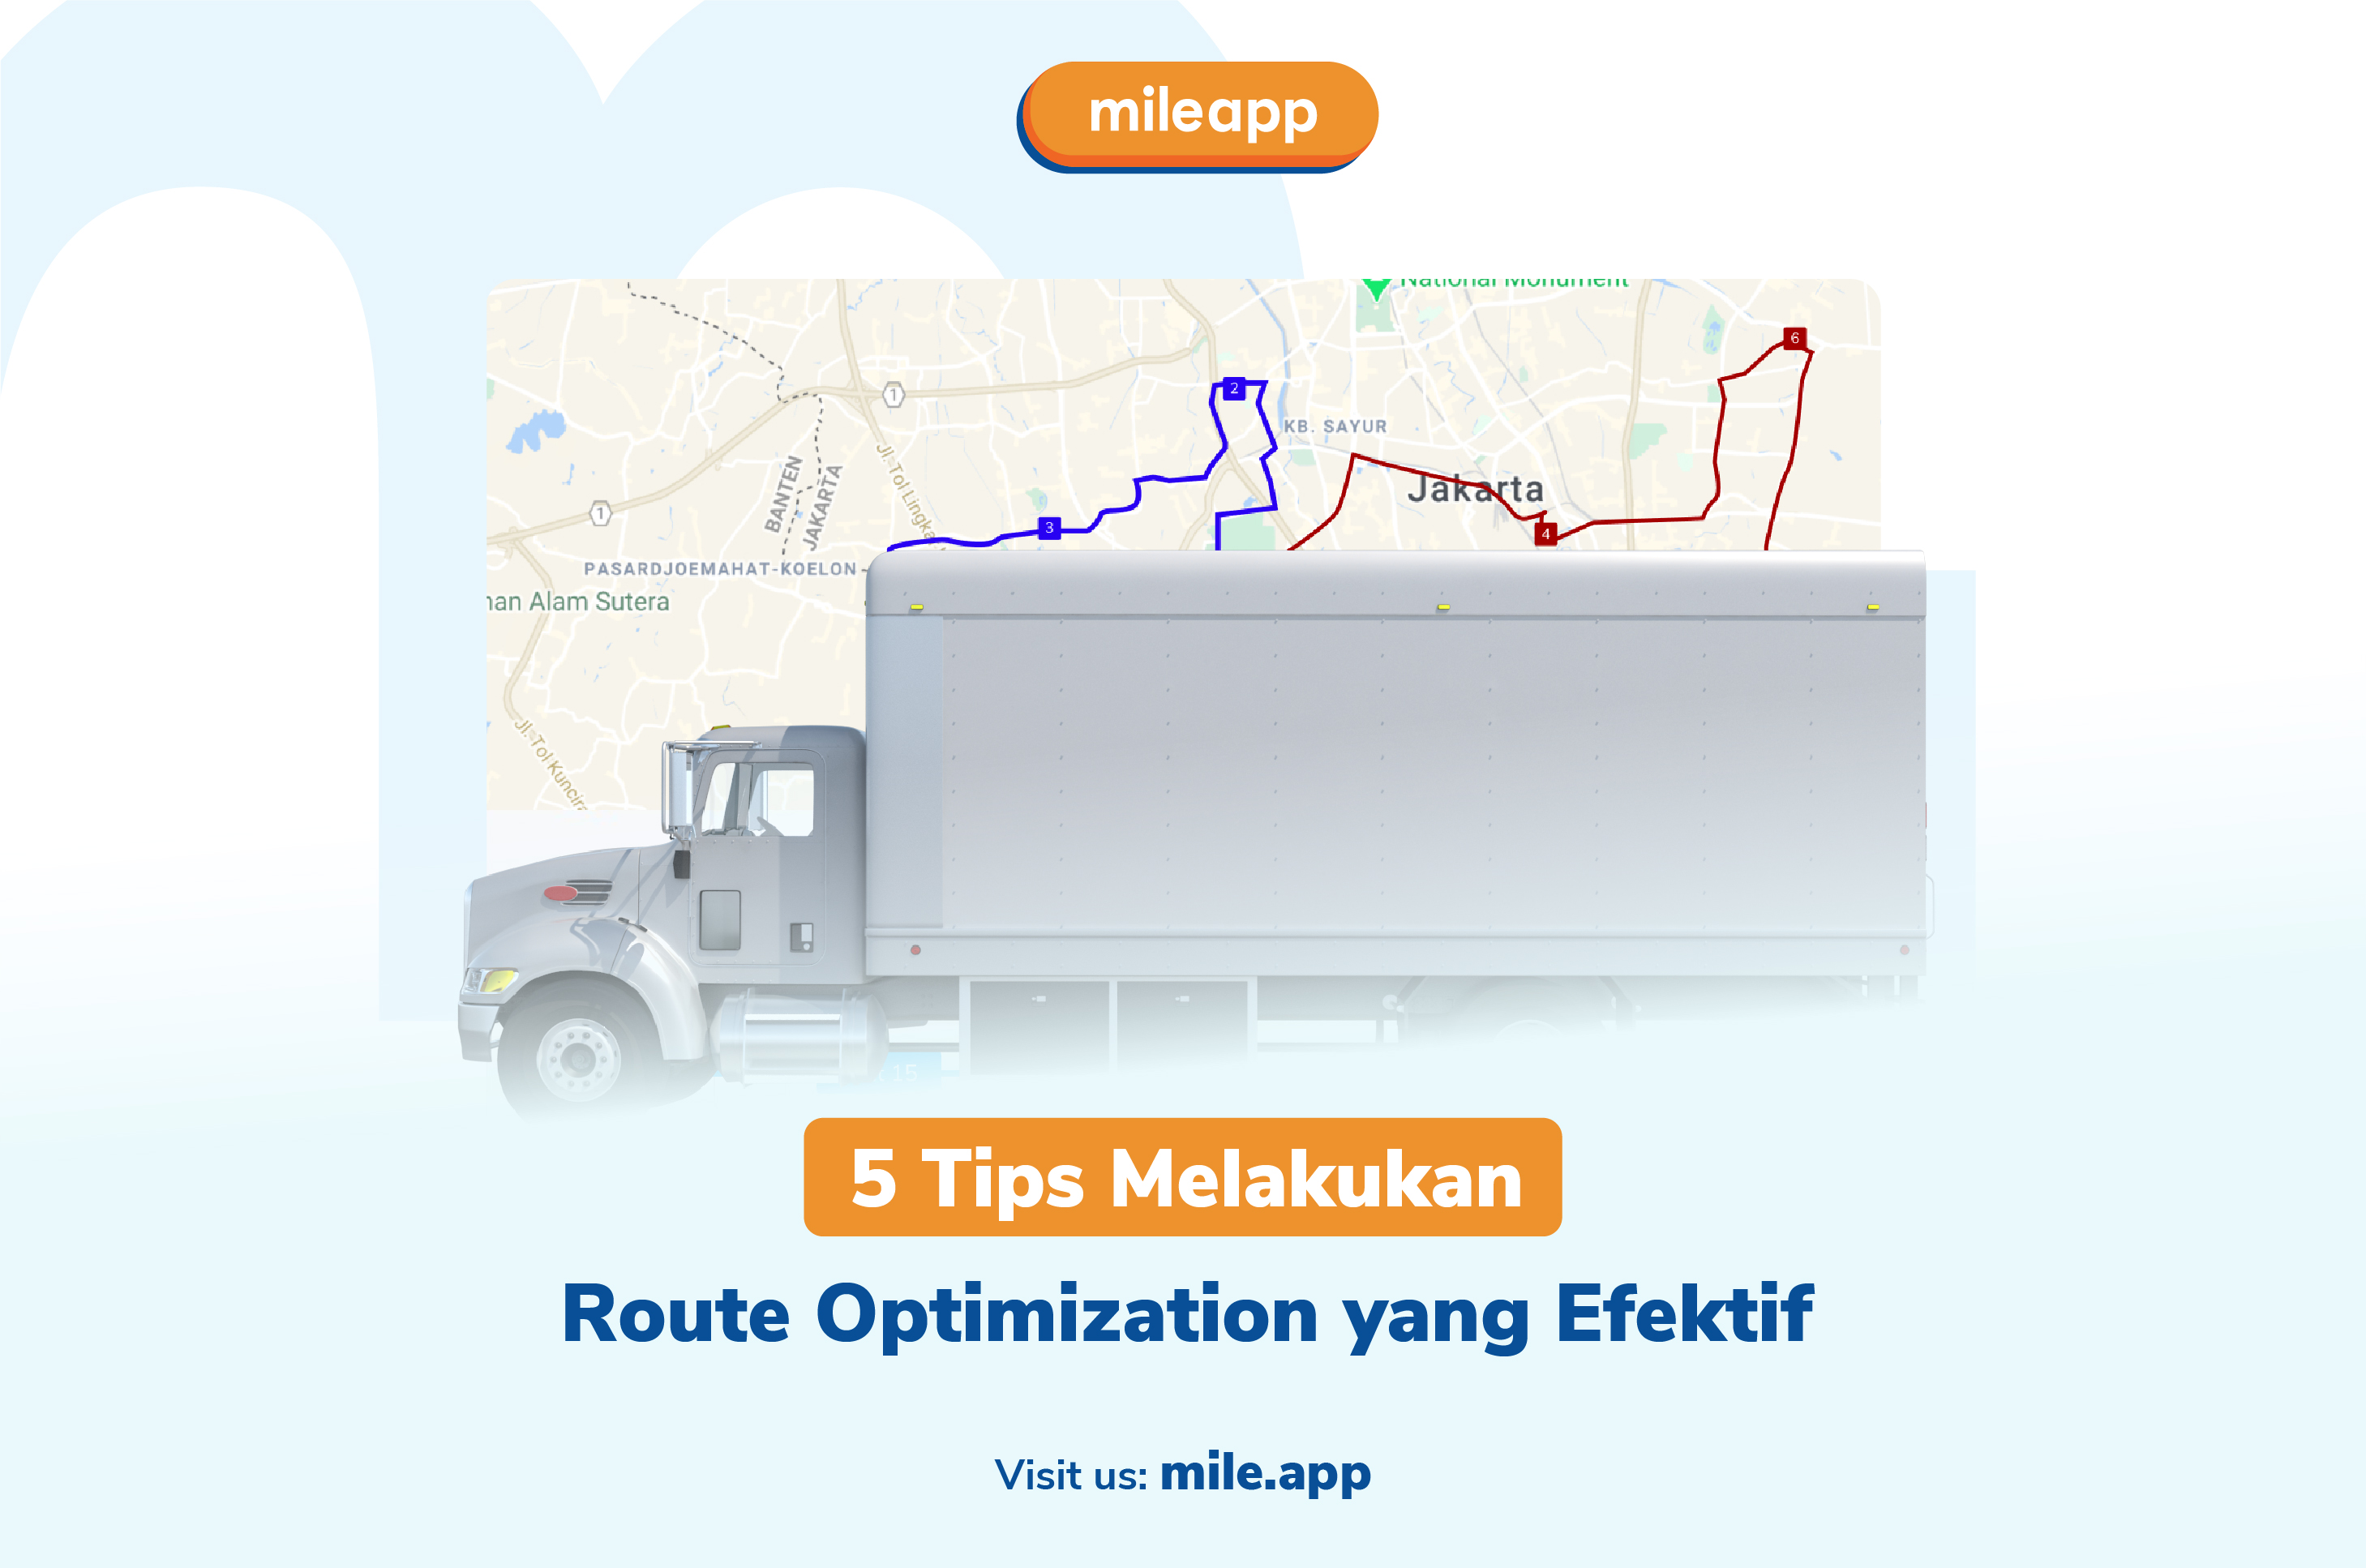 route optimization